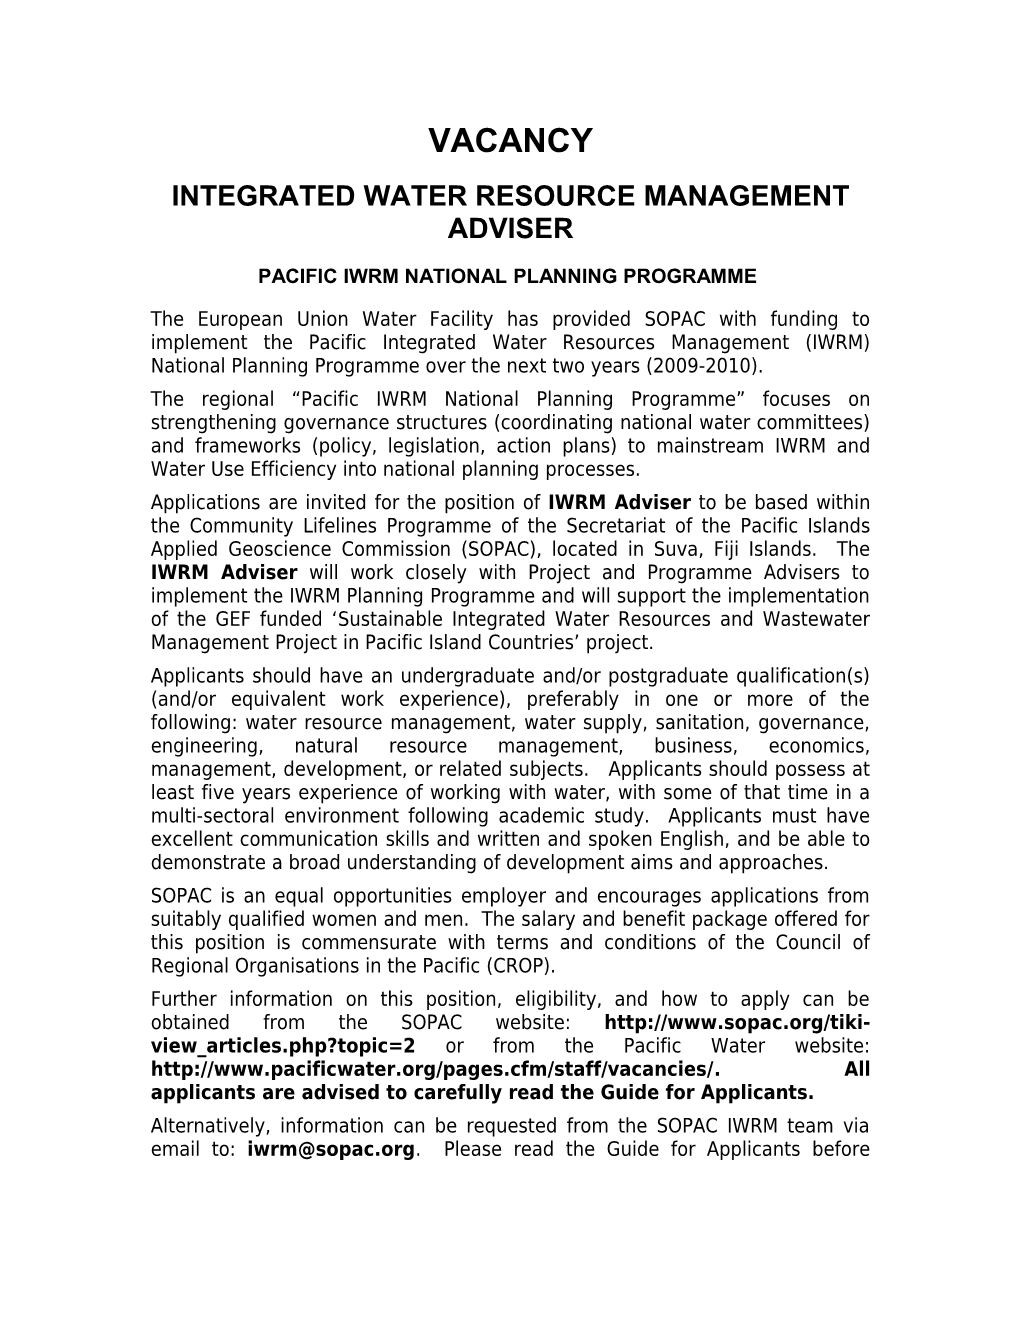 Integrated Water Resource Management Adviser